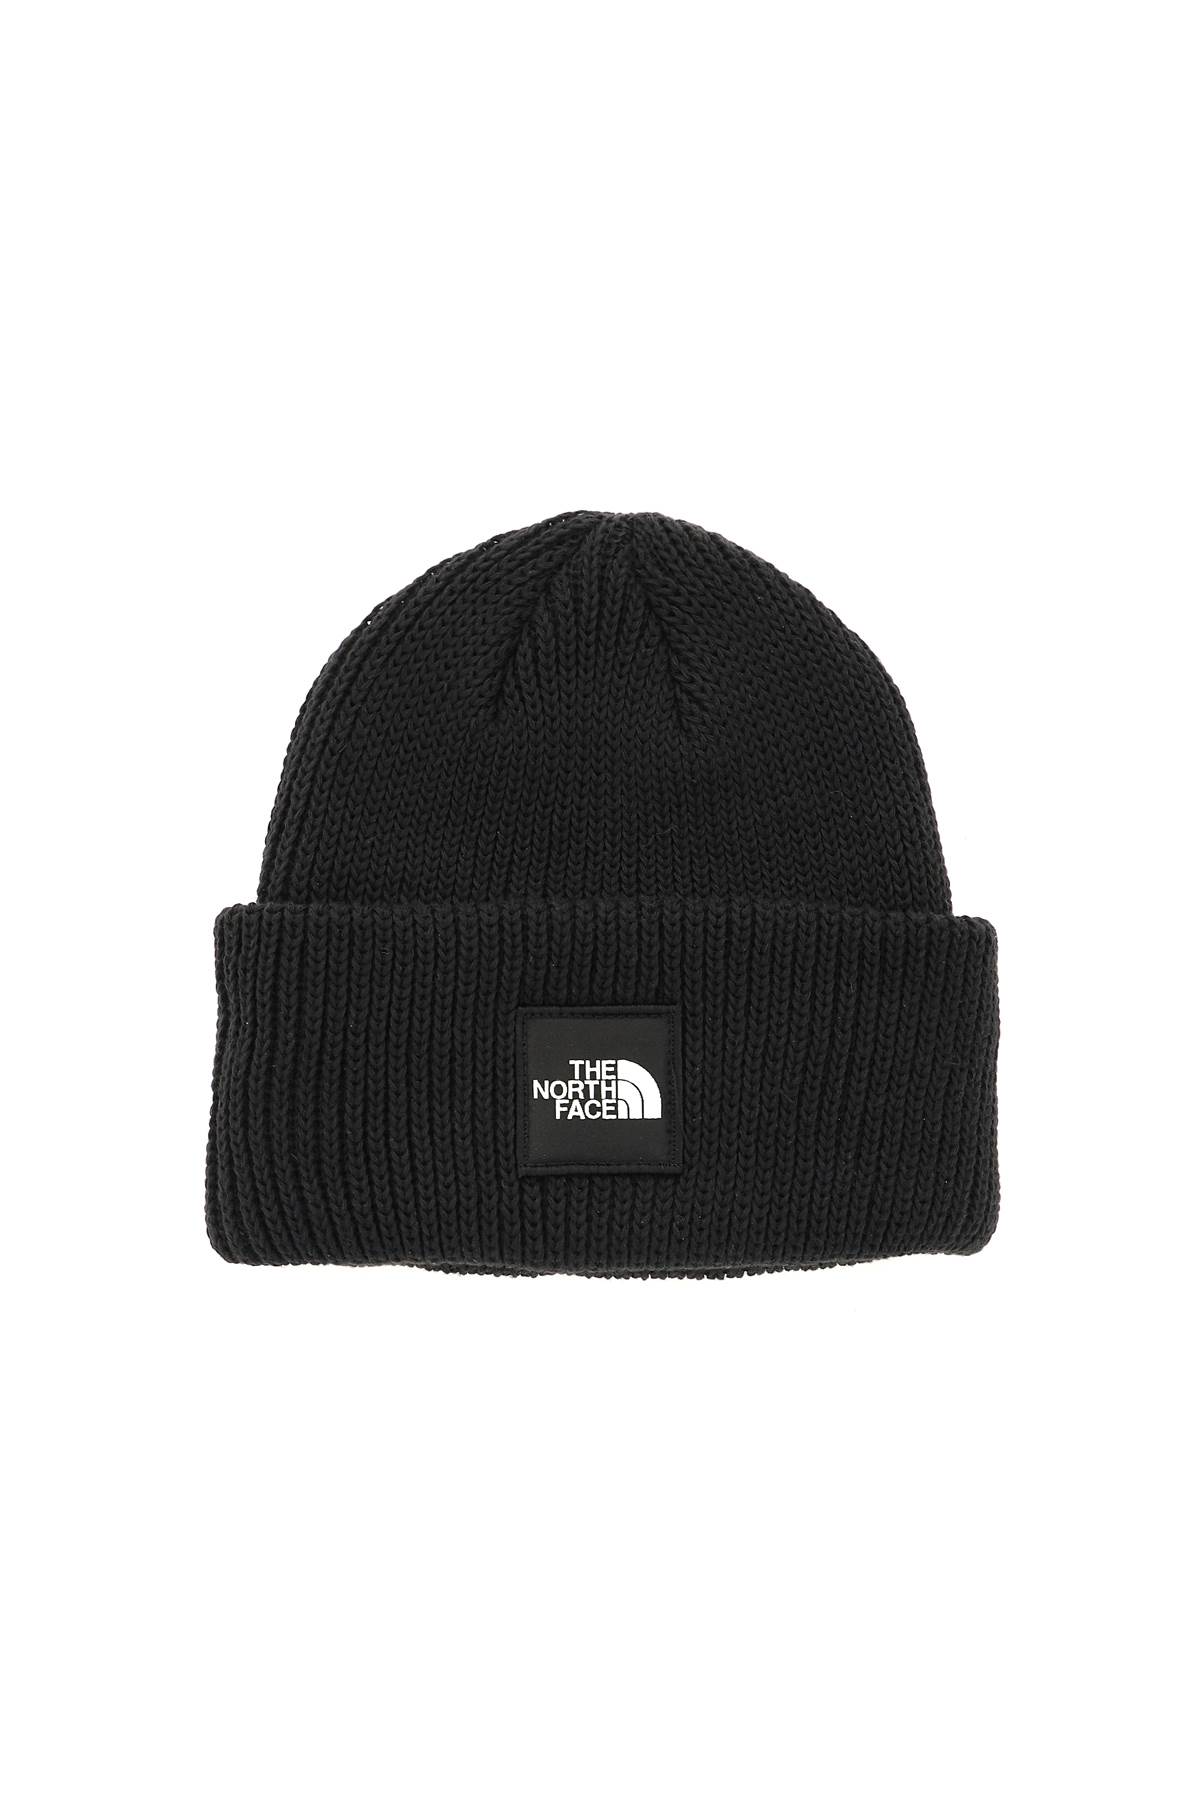 The North Face Black Box Beanie Hat